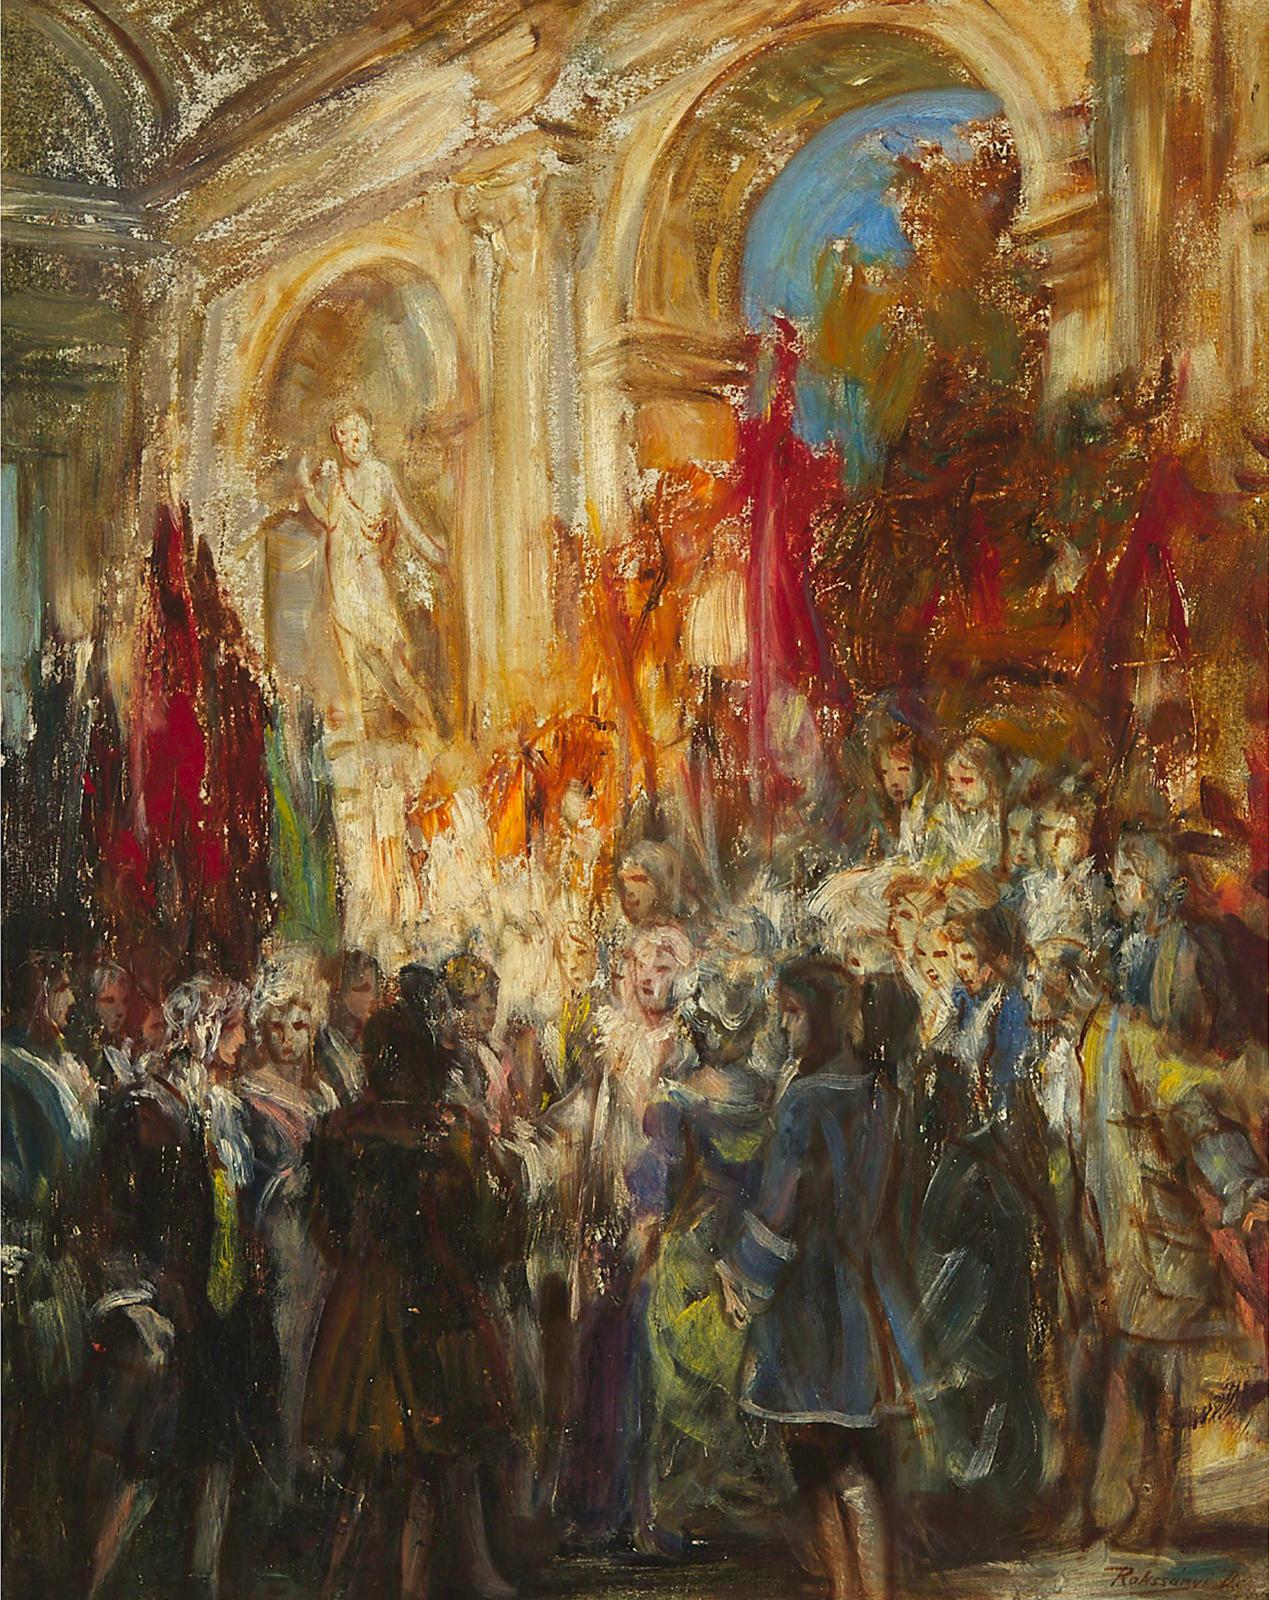 Rezsö Rakssányi (1879-1950) - A Royal Ceremony In A Vaulted Interior